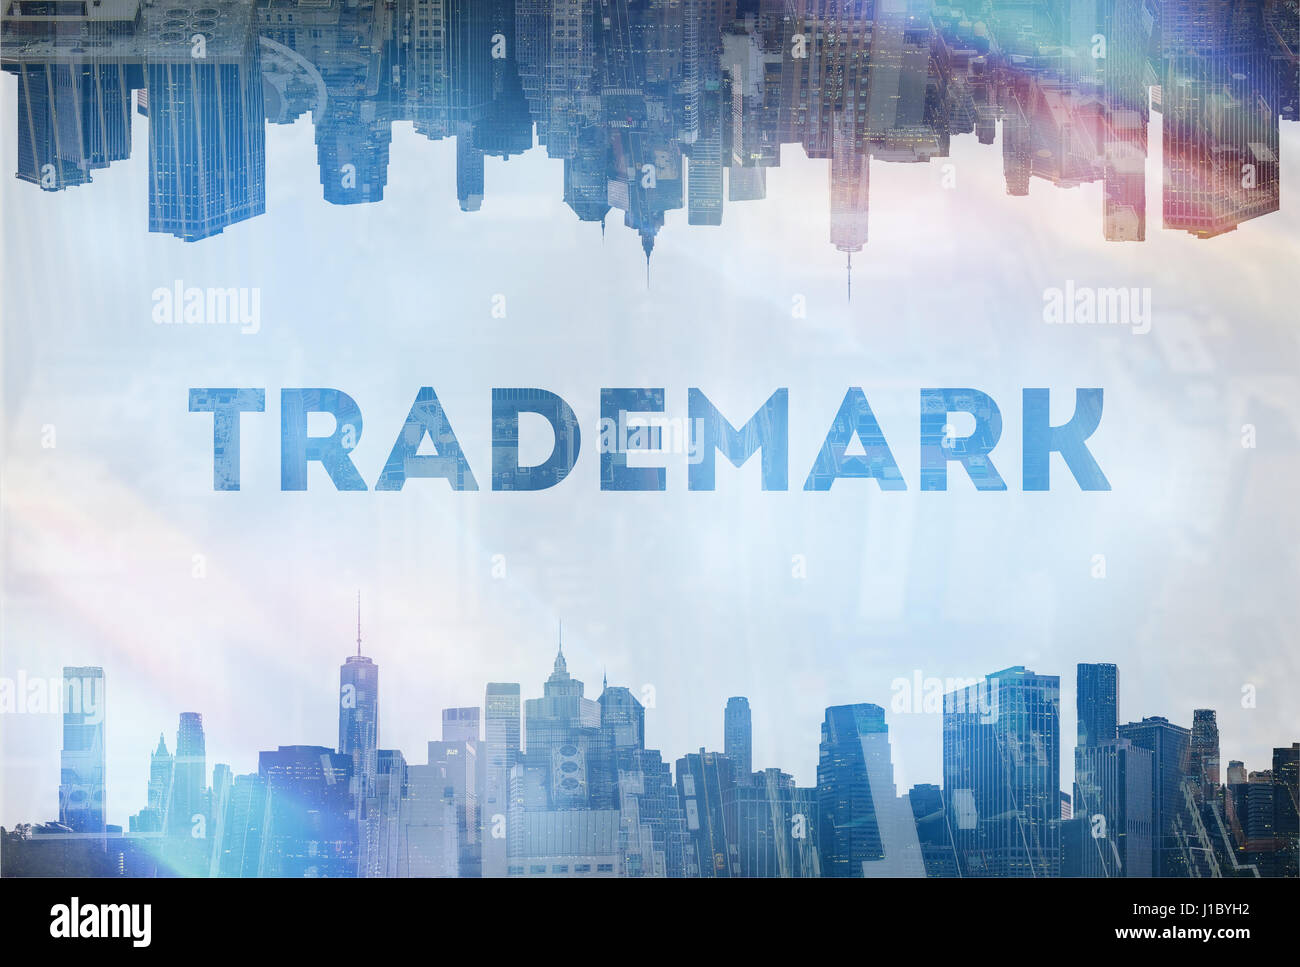 Trademark  concept image Stock Photo